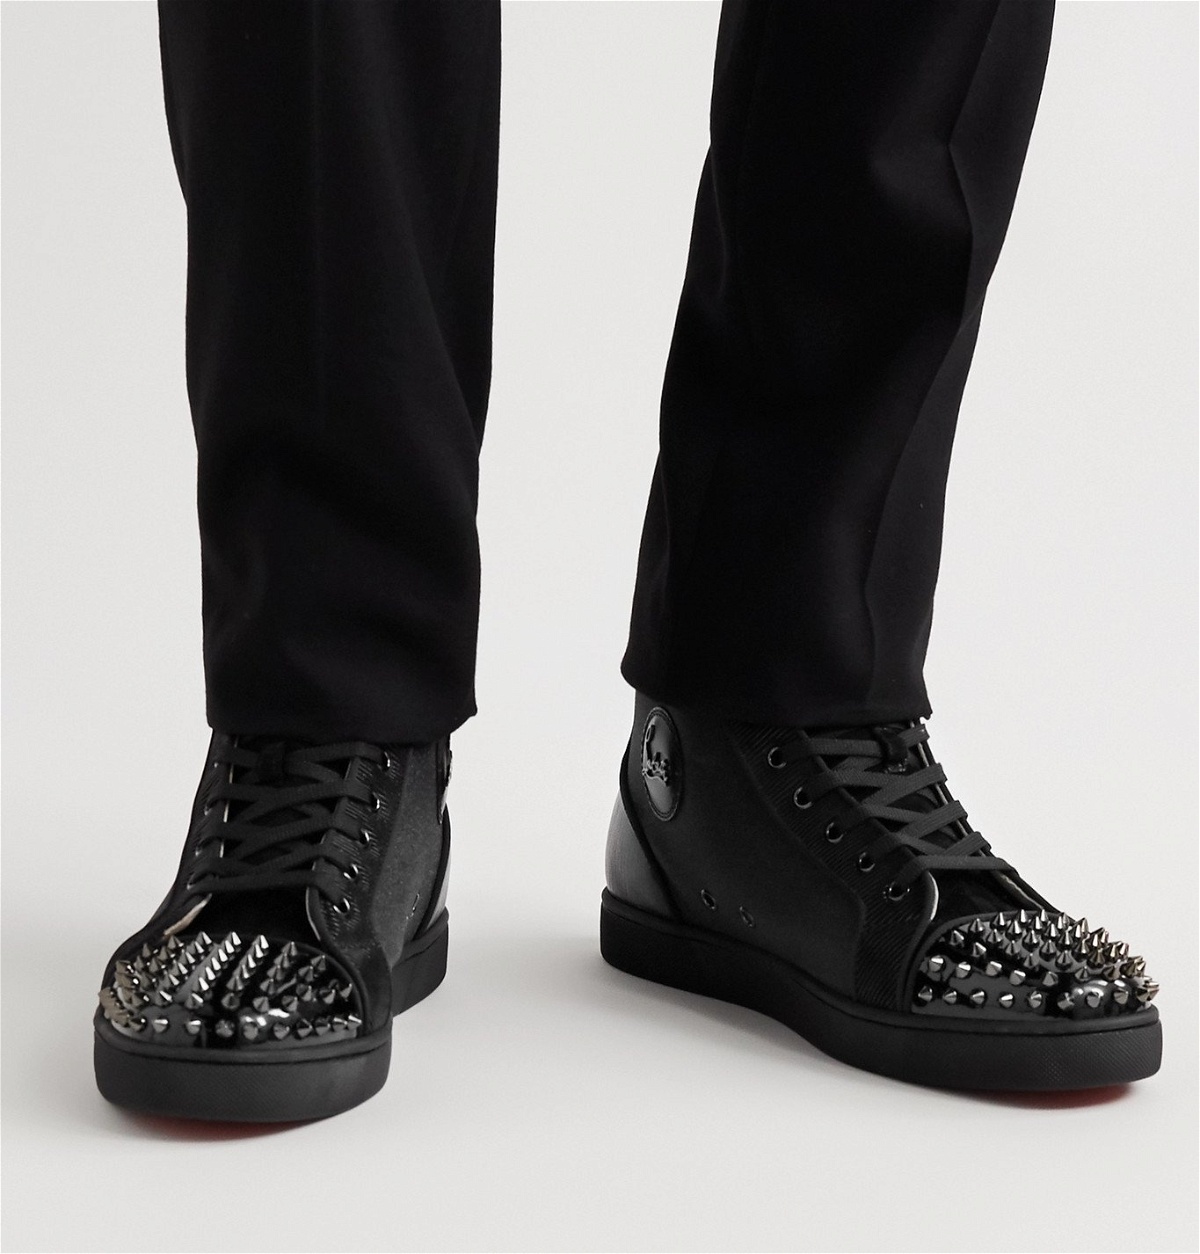 Lou Spikes Orlato Sneakers in Black - Christian Louboutin